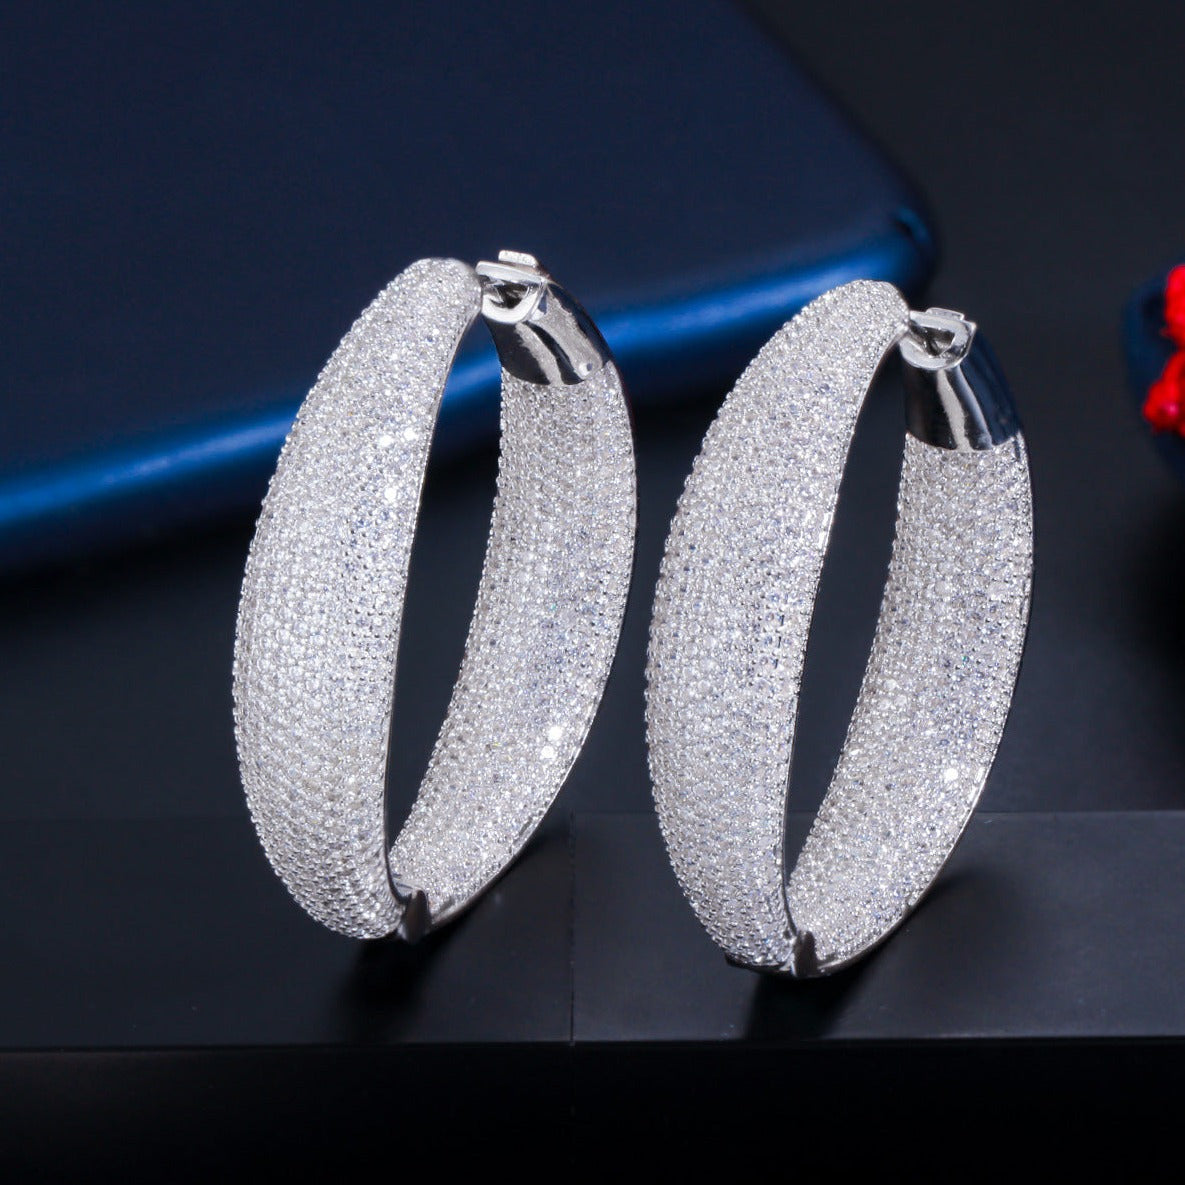 MiniLux "Como" earrings